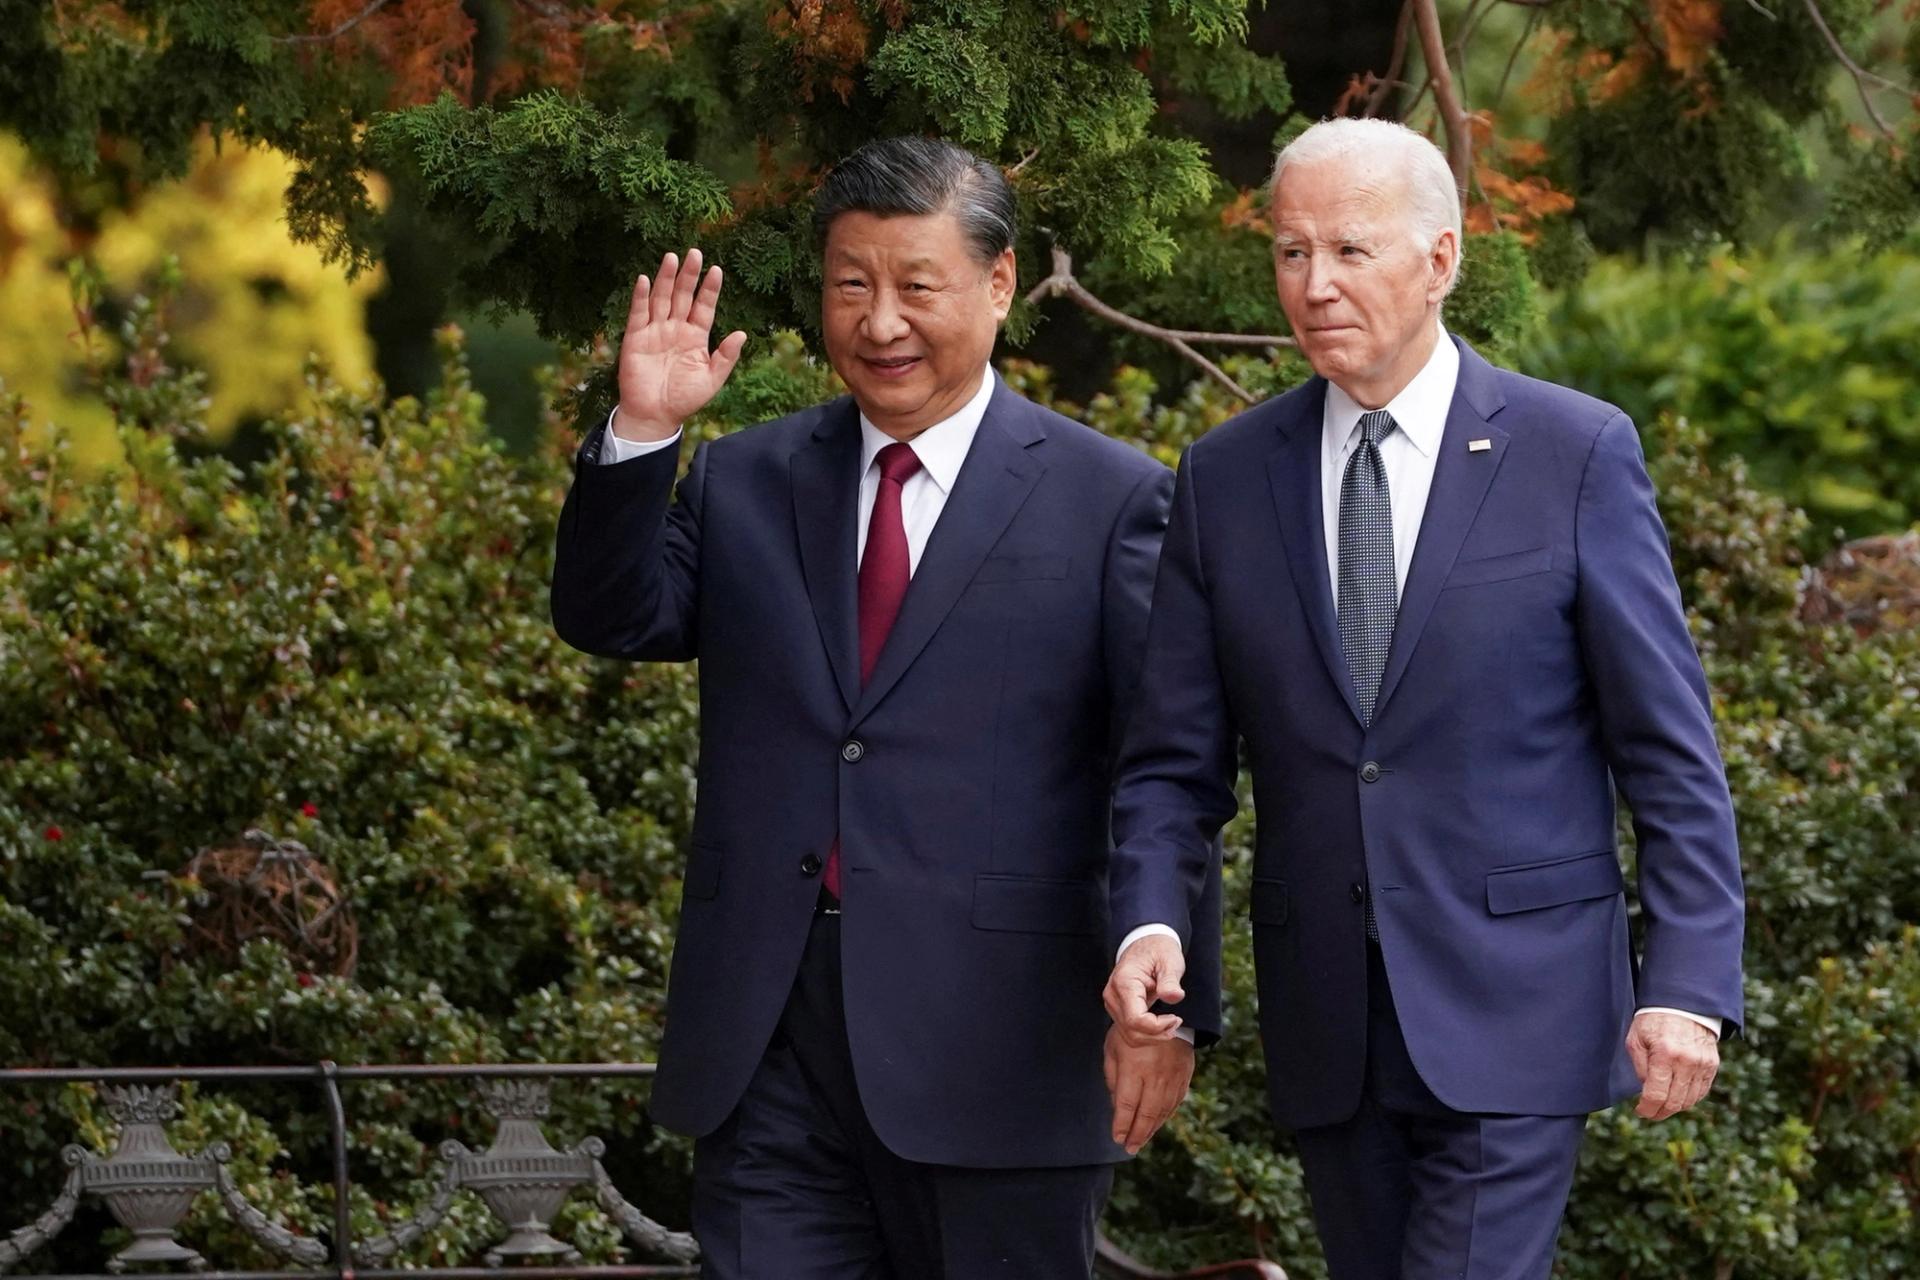 US, China talks illustrate hardening divide (semafor.com)